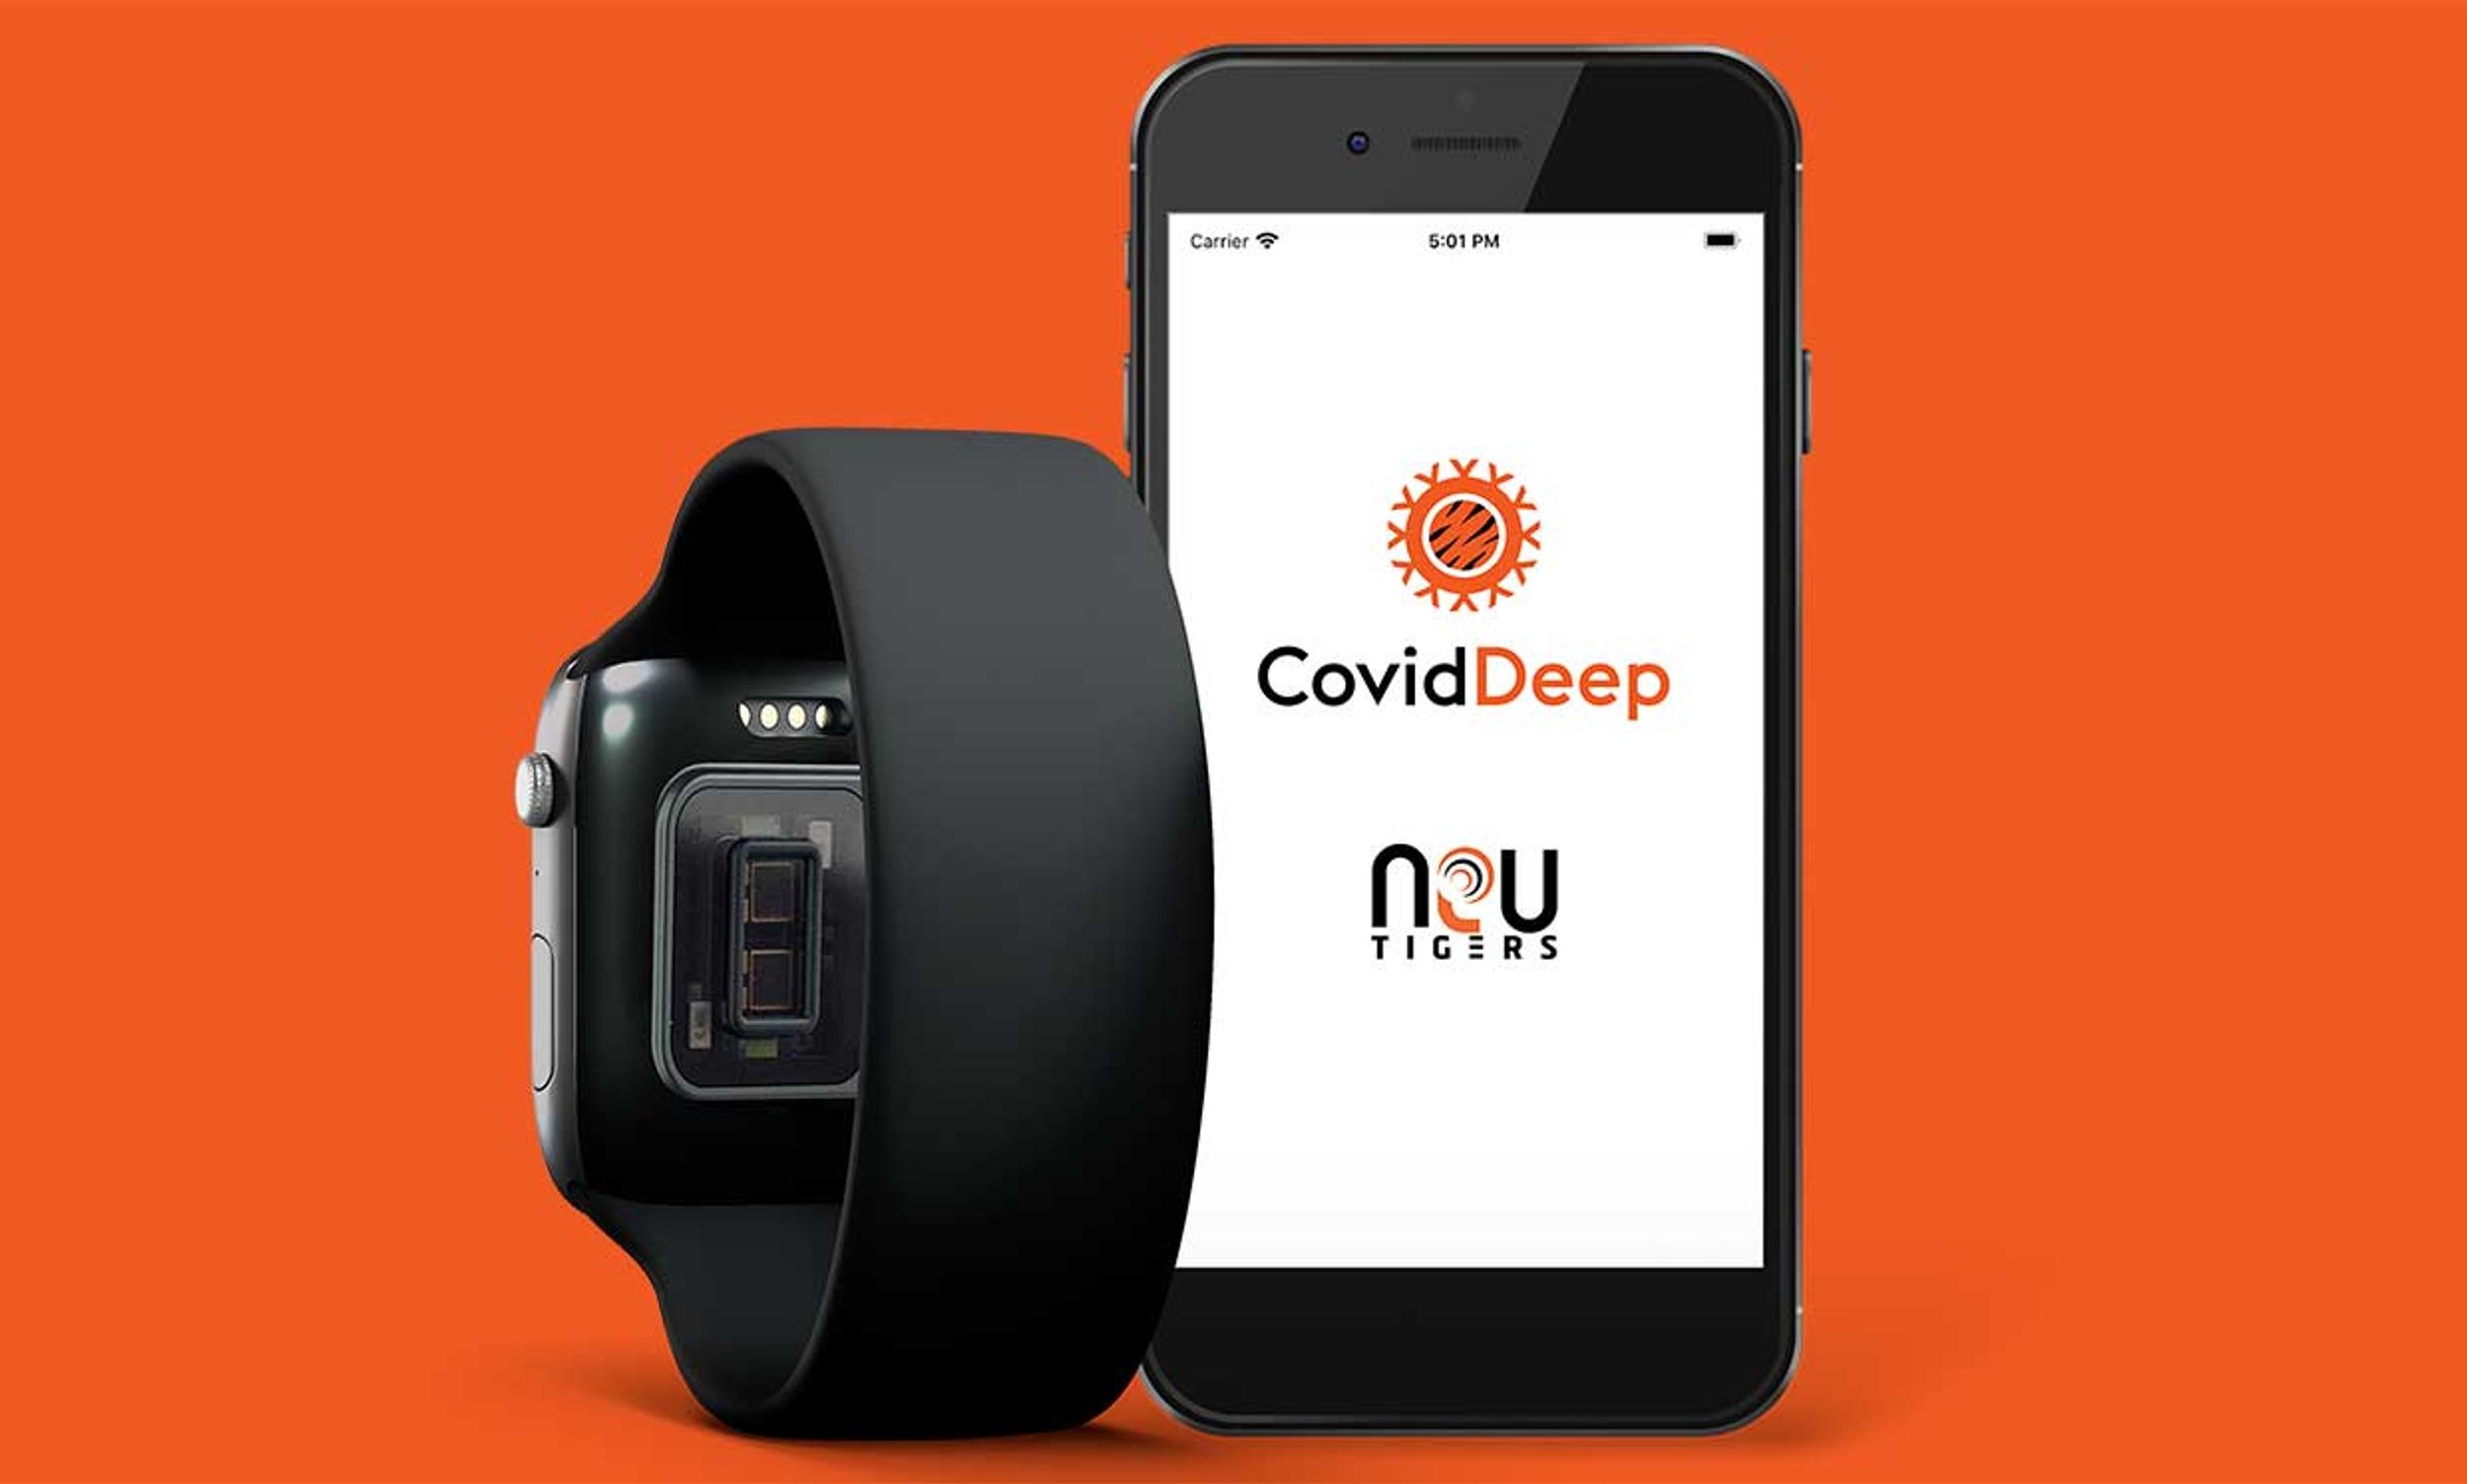 Wearable and NeuTigers' CovidDeep App on a phone